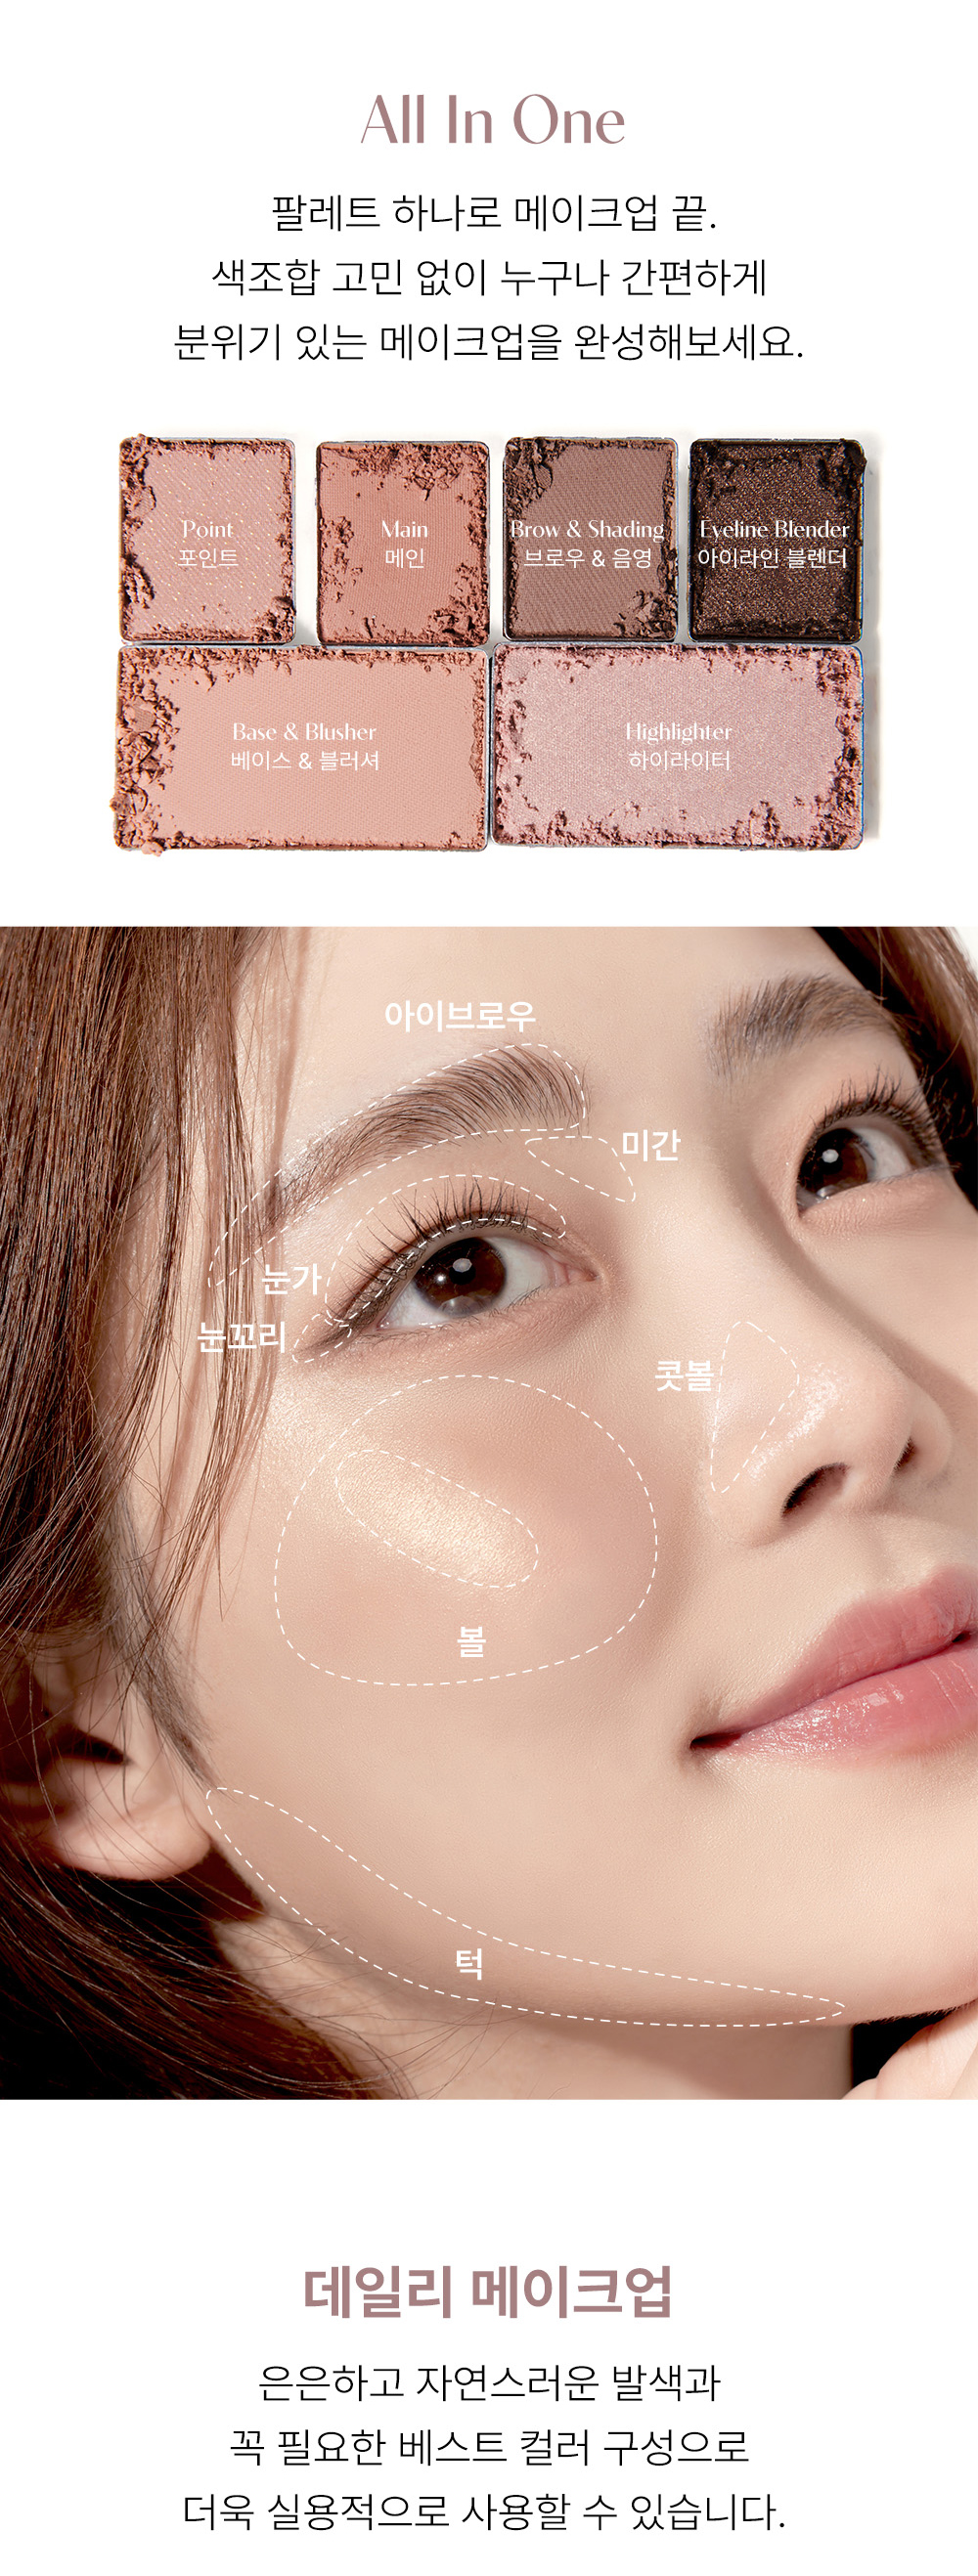 cosmetics model image-S170L1